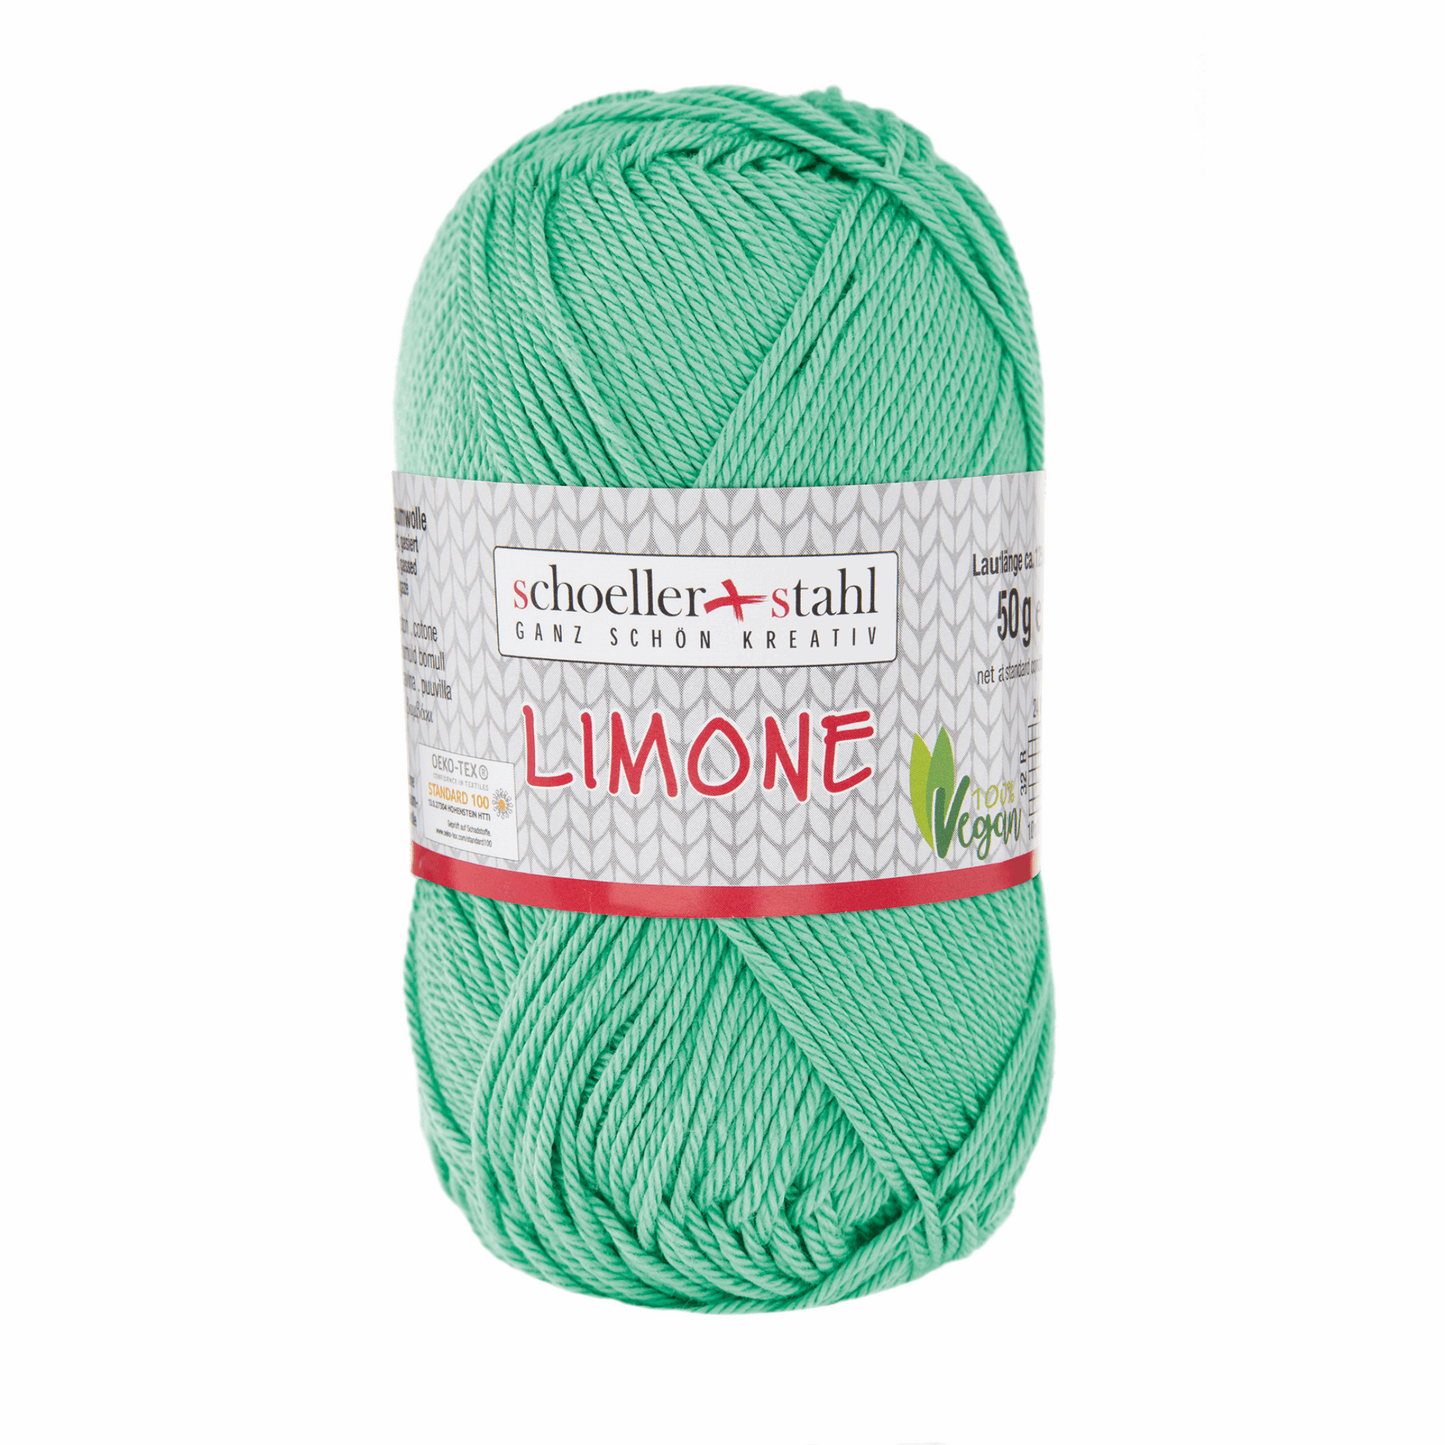 Limone 50g, 90130, Farbe 191, meergrün